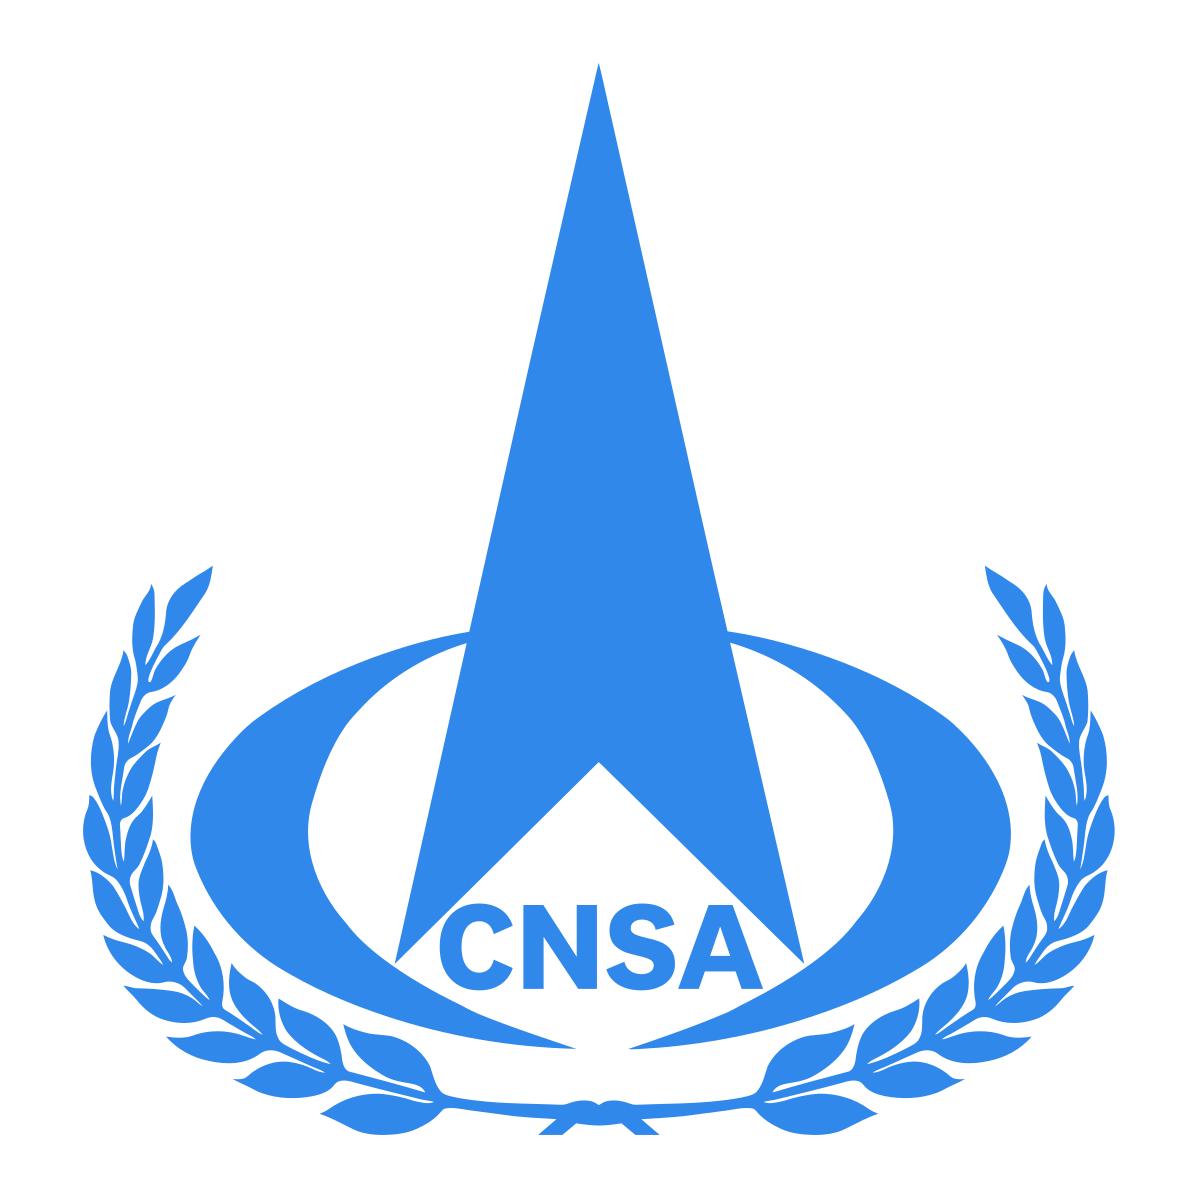 China National Space Administration (CNSA)